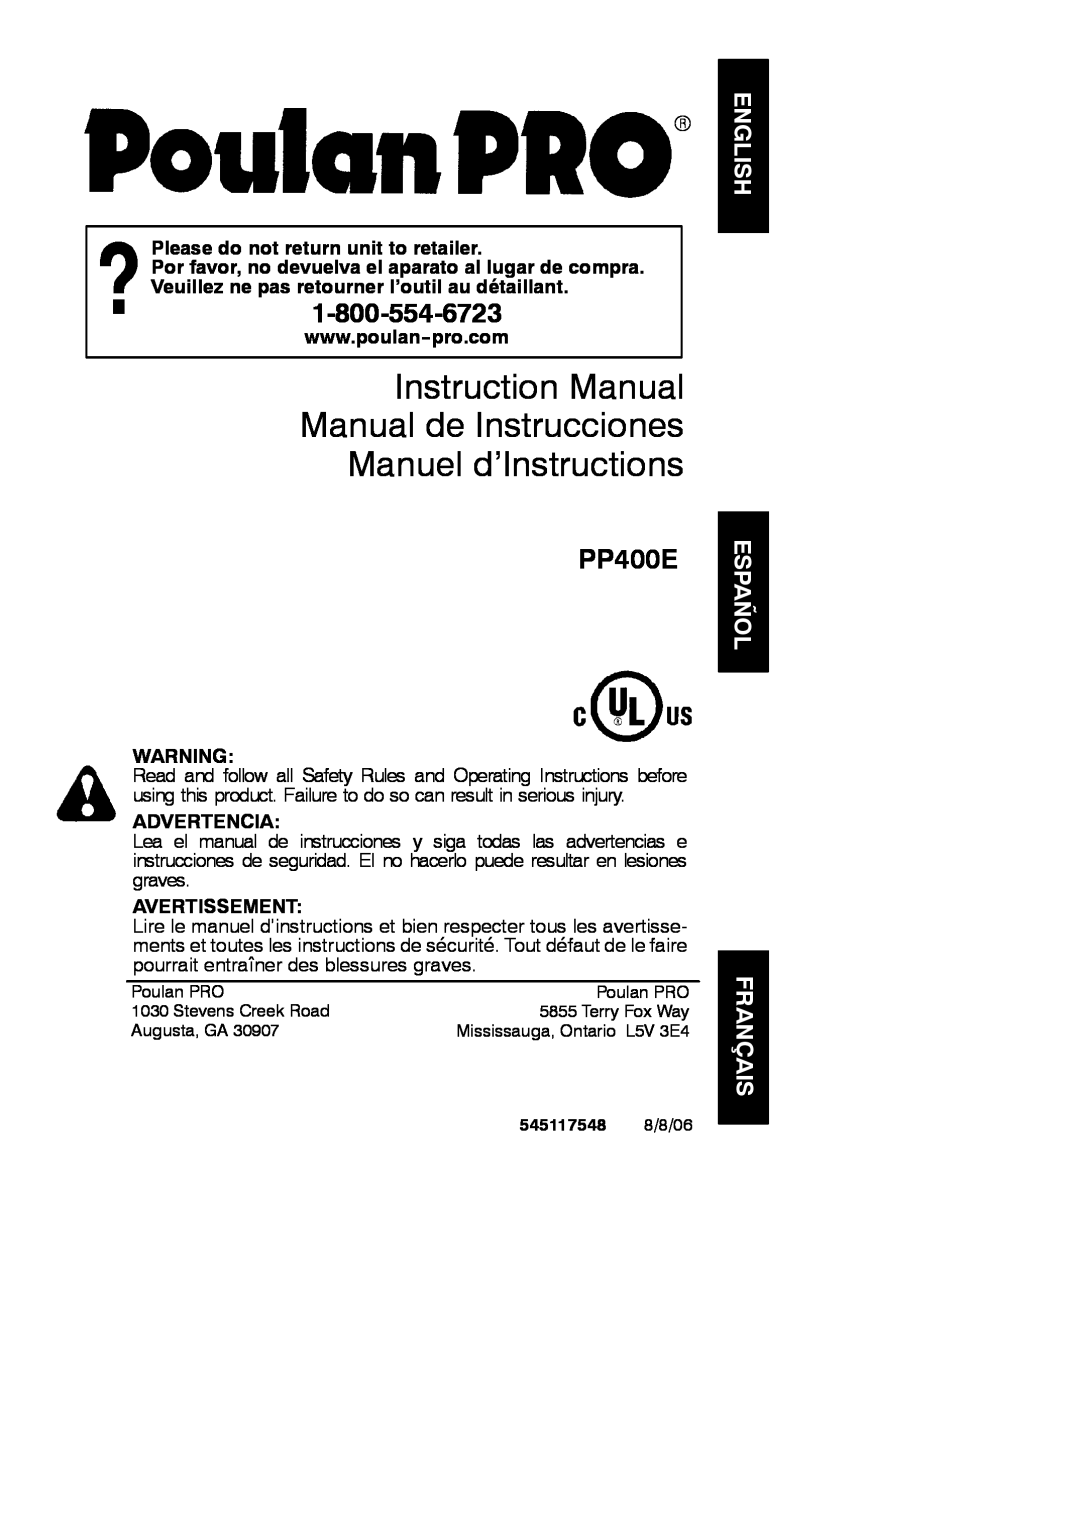 Poulan PP400E instruction manual English, Español, Français, Instruction Manual Manual de Instrucciones, 1-800-554-6723 